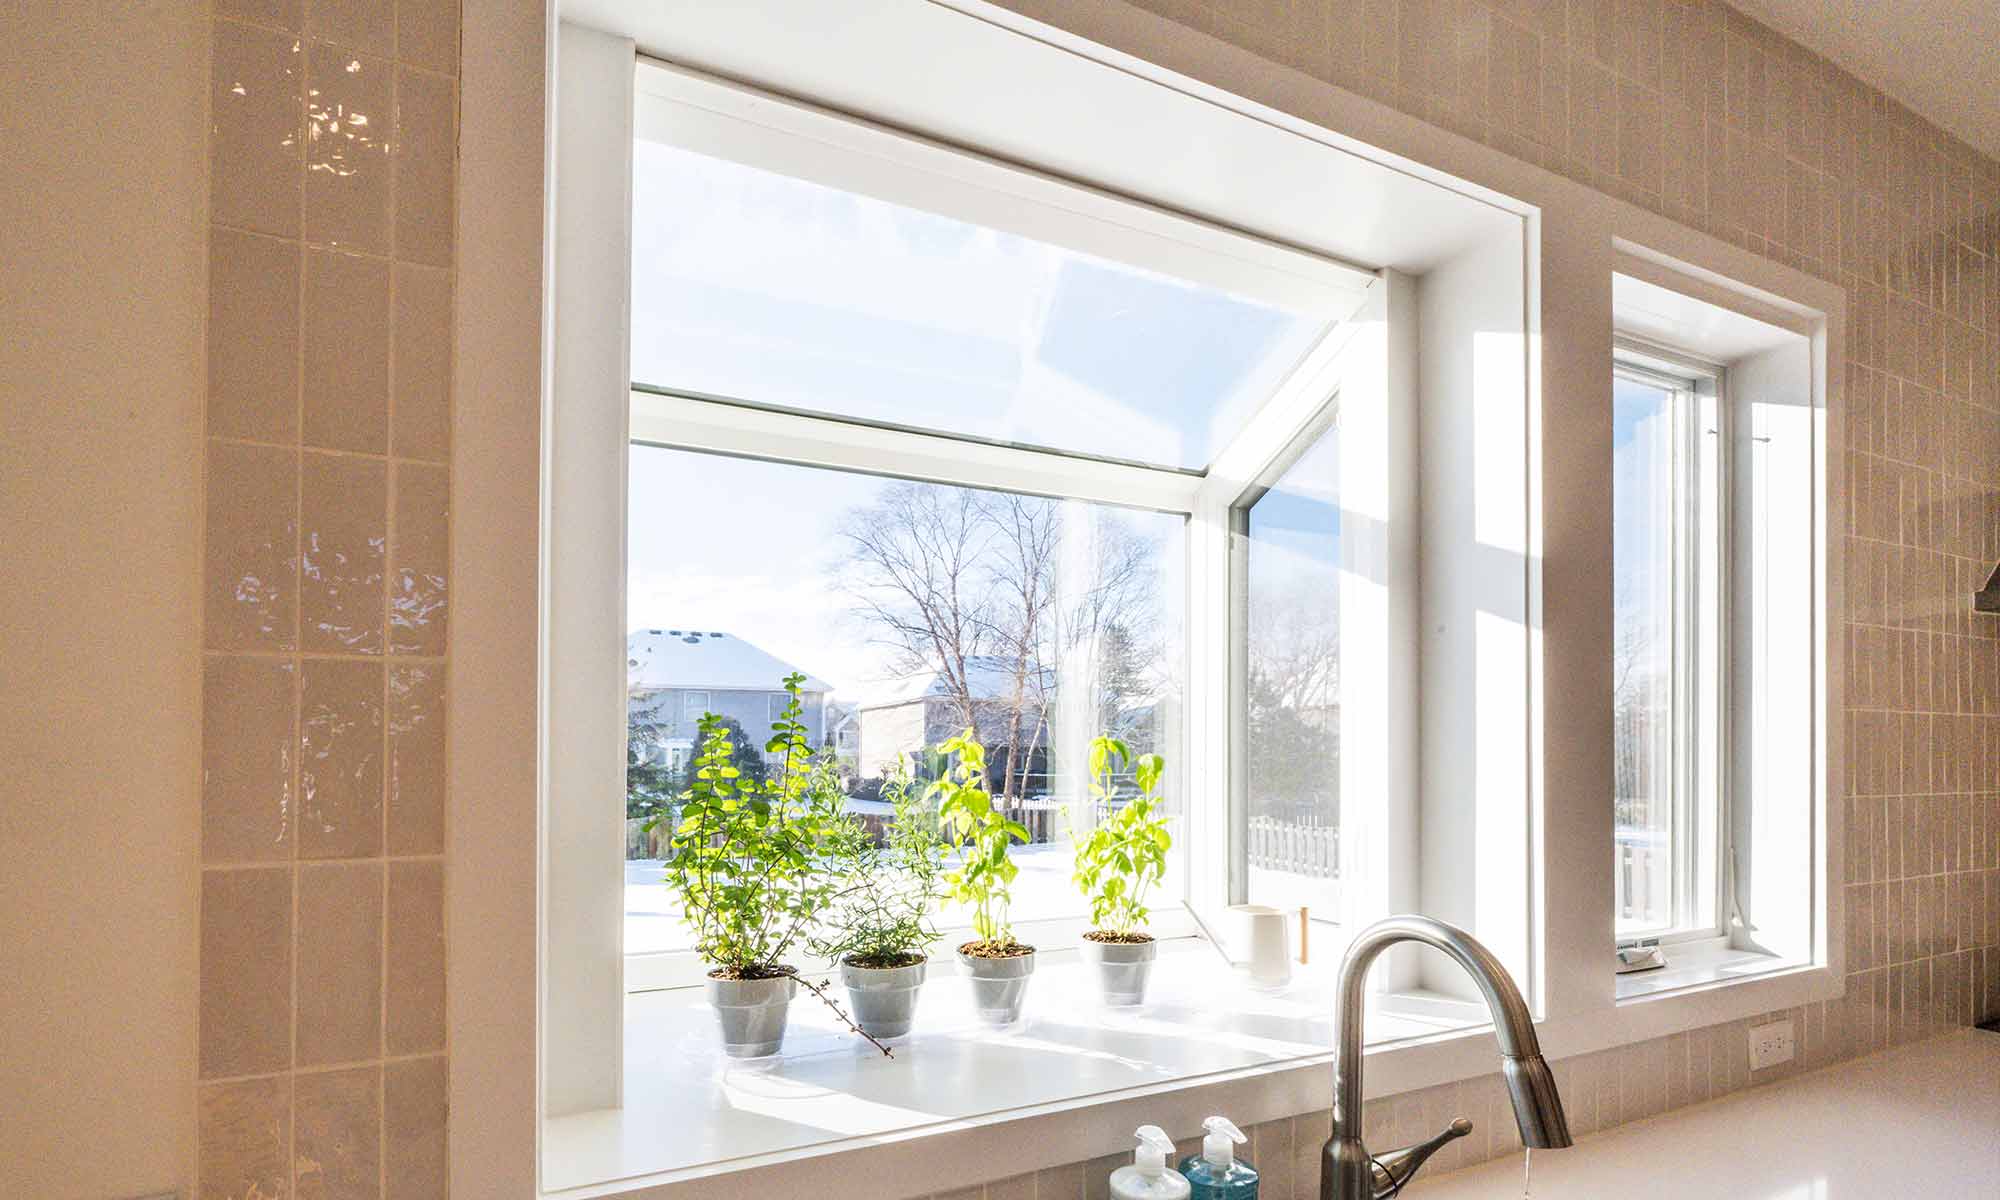 greenhouse bay window in modern kitchen remodel in wheaton illinois